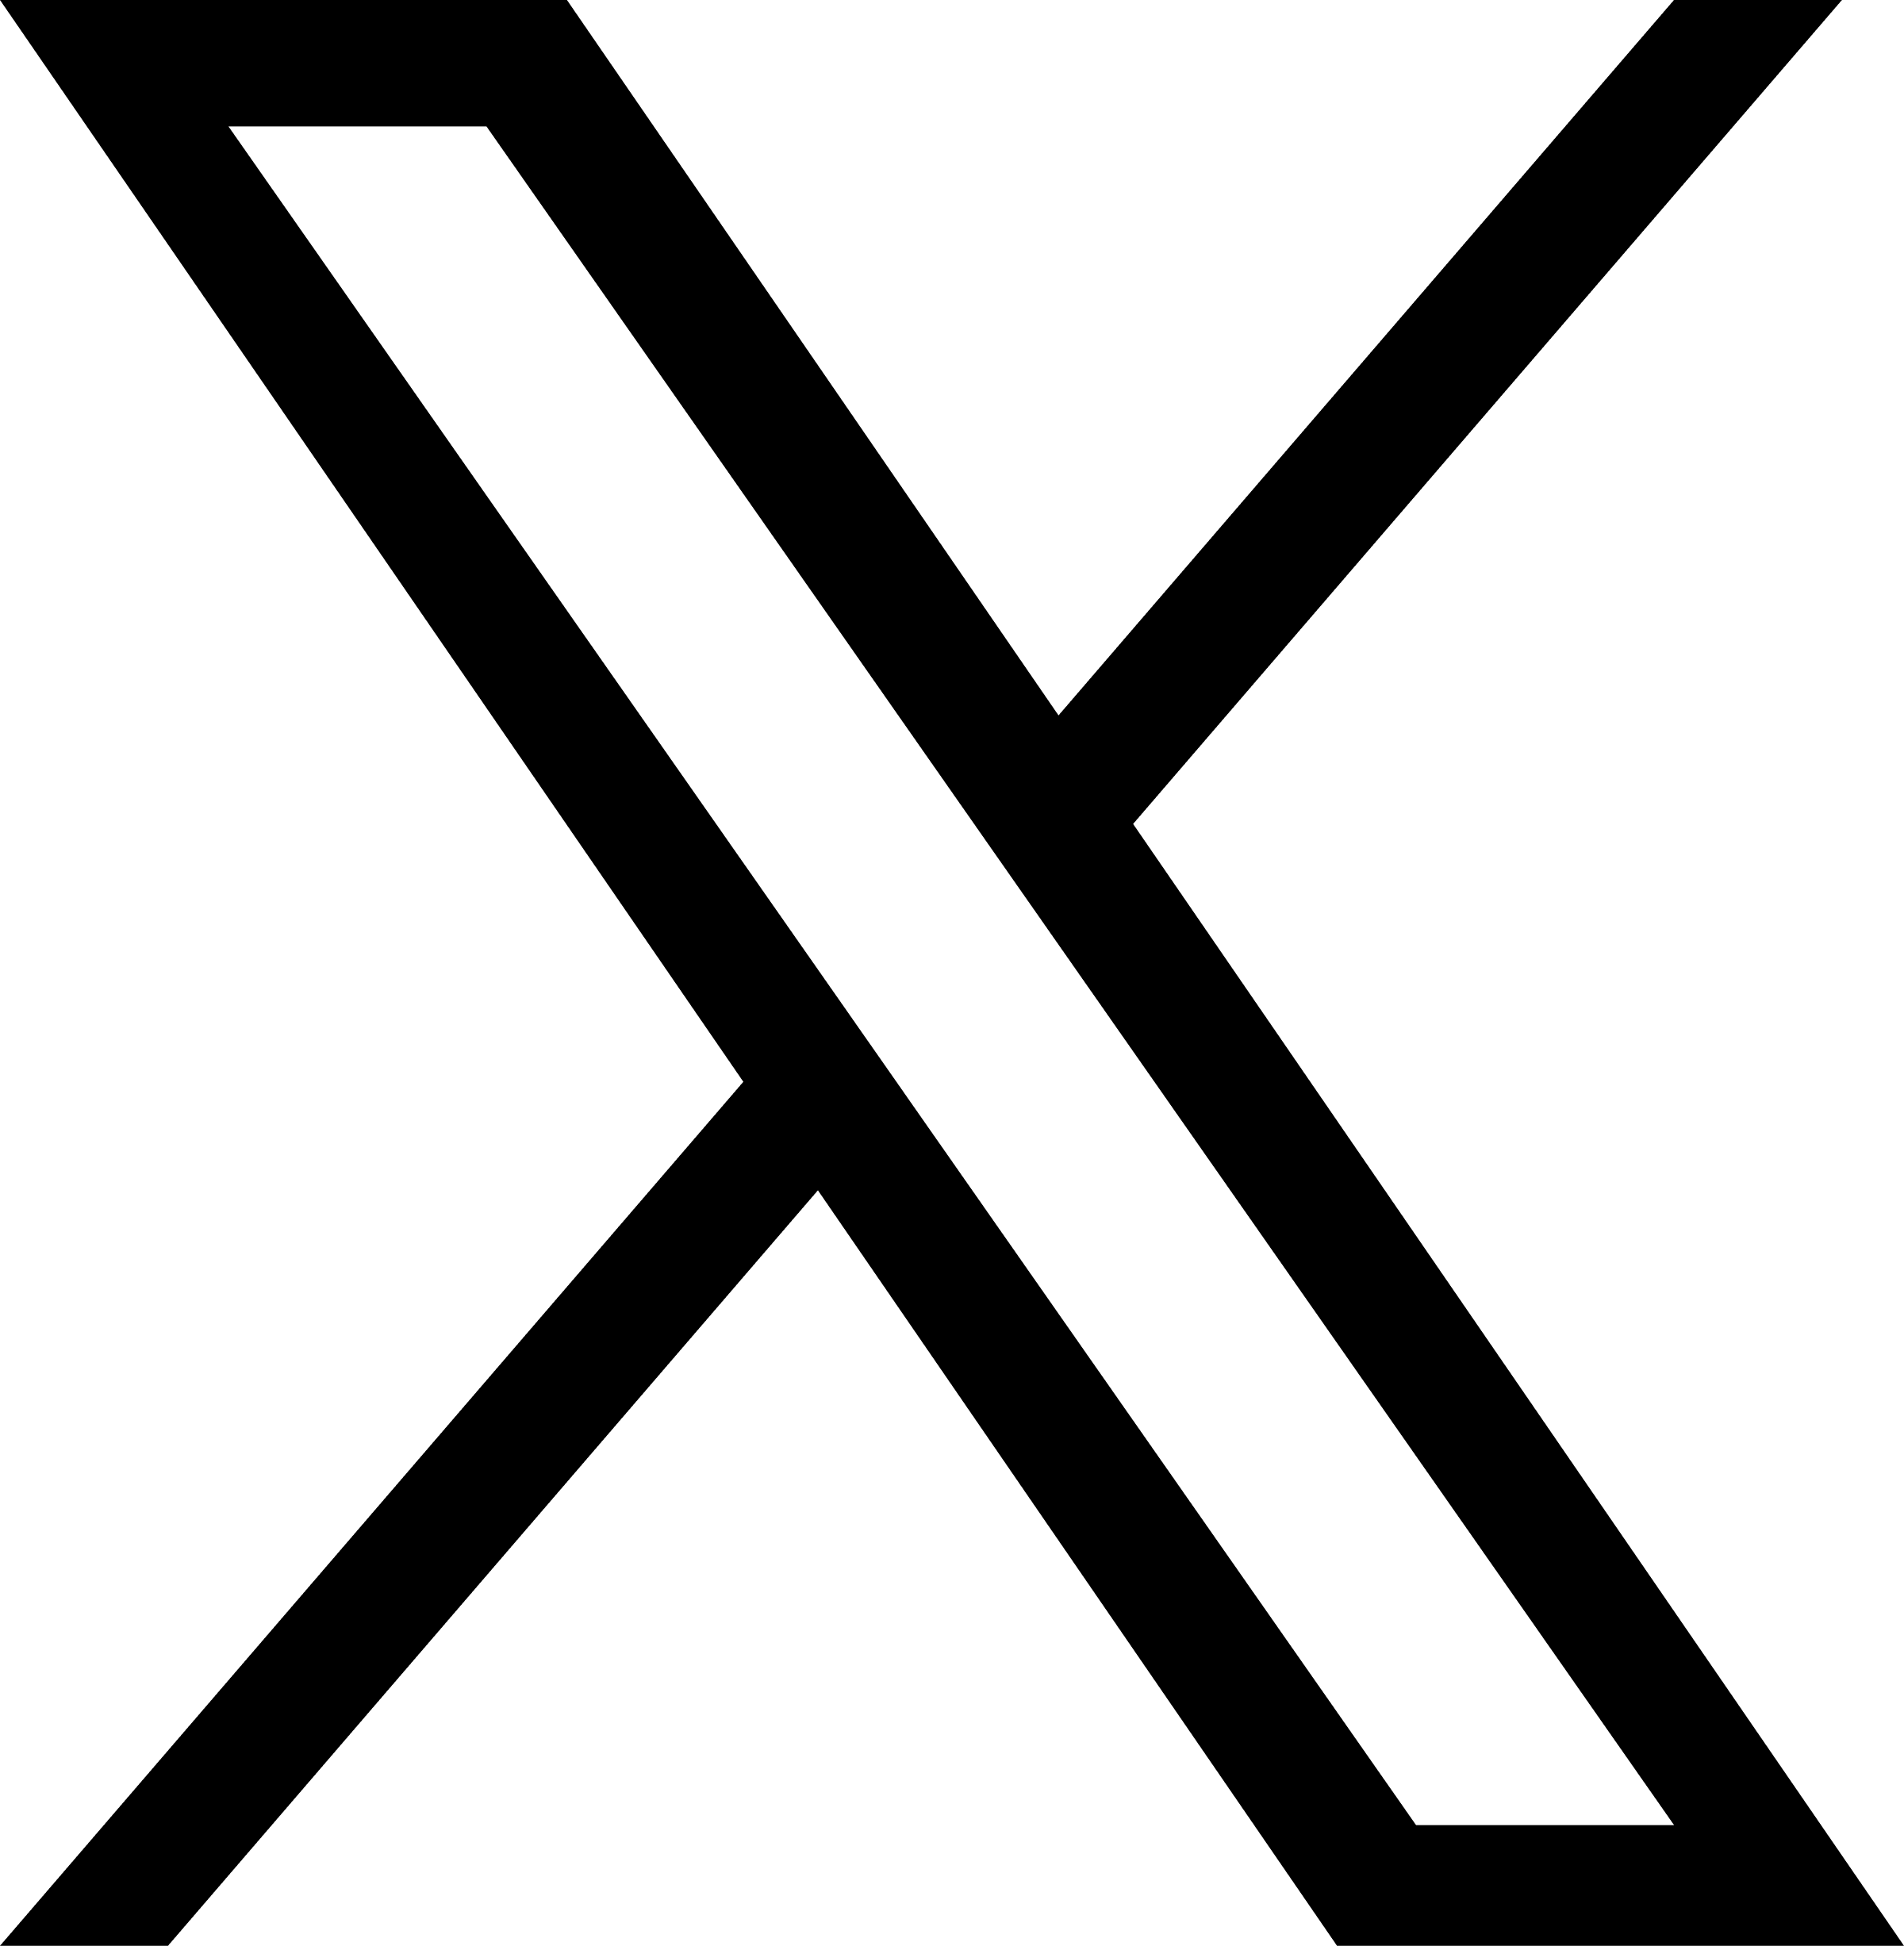 X logo black